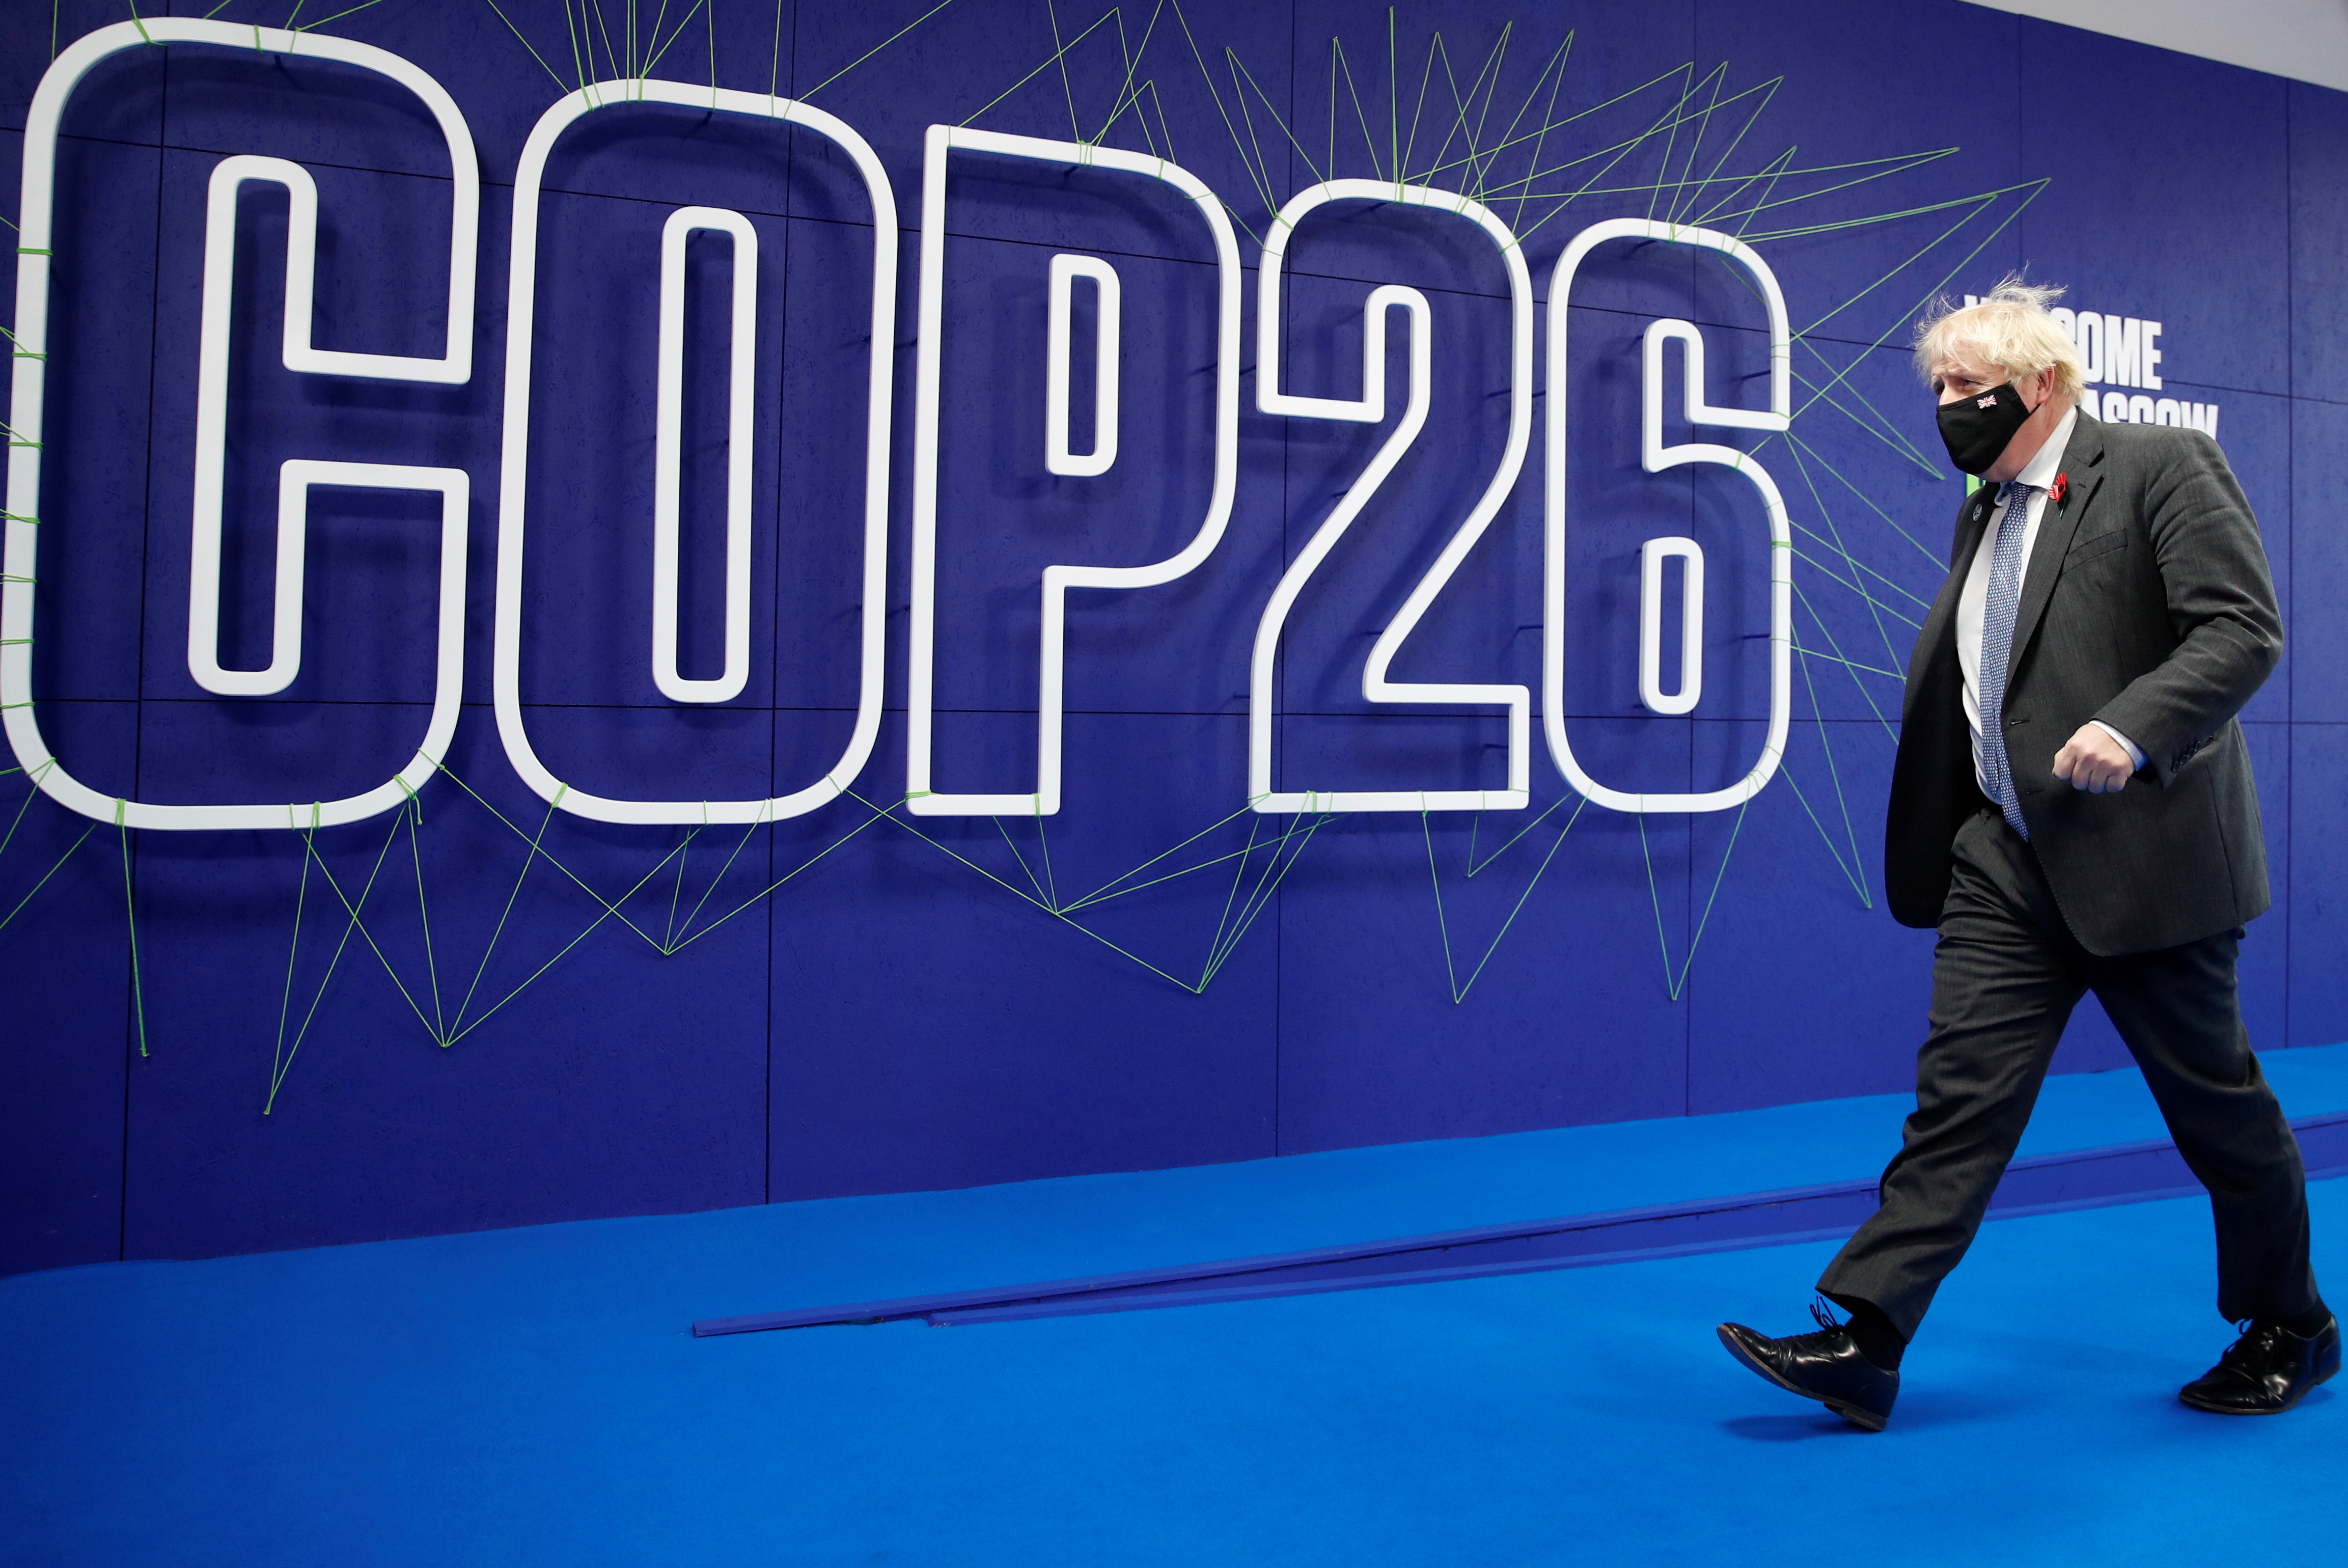 Britain's Prime Minister Boris Johnson arrives for the UN Climate Change Conference (COP26) in Glasgow, Scotland, Britain, November 10, 2021. REUTERS/Phil Noble/Pool